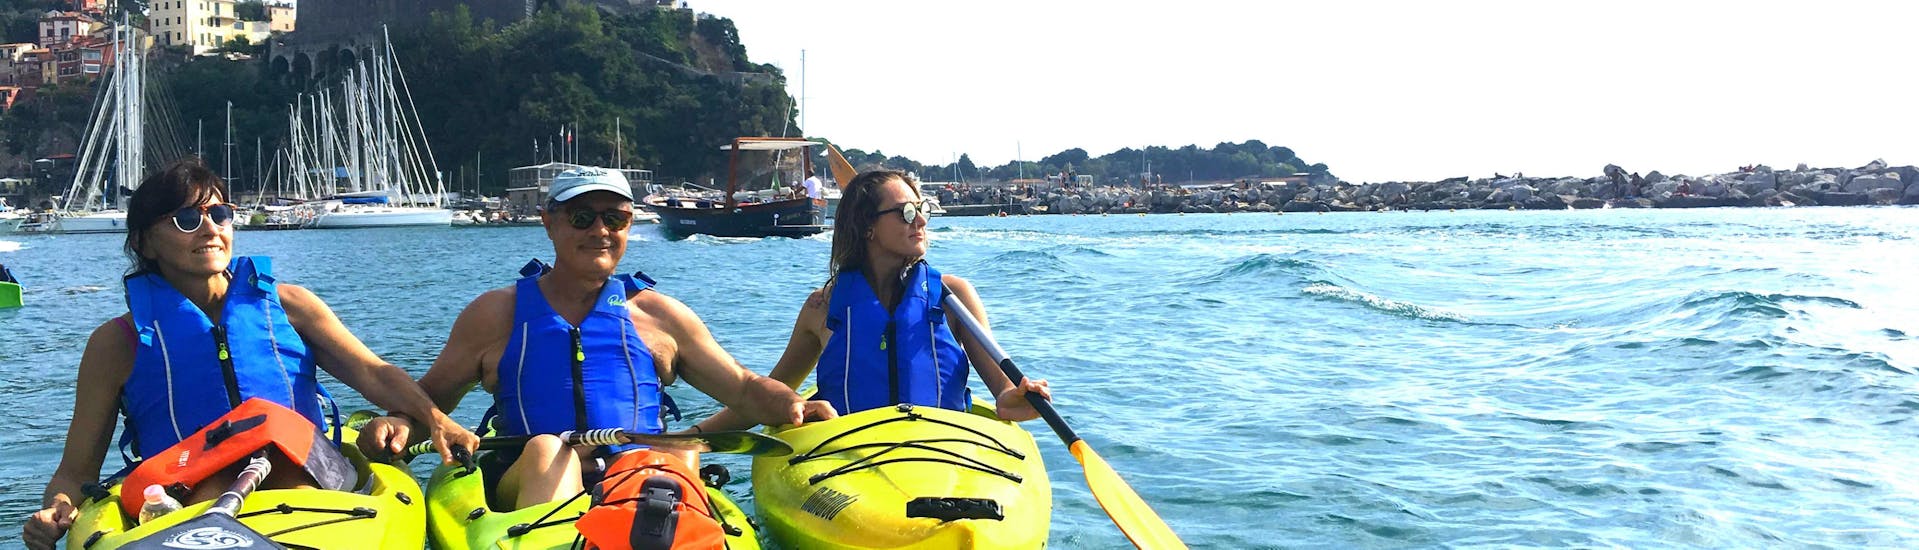 Leichte Kayak & Kanu-Tour in Lerici - San Terenzo Strand.